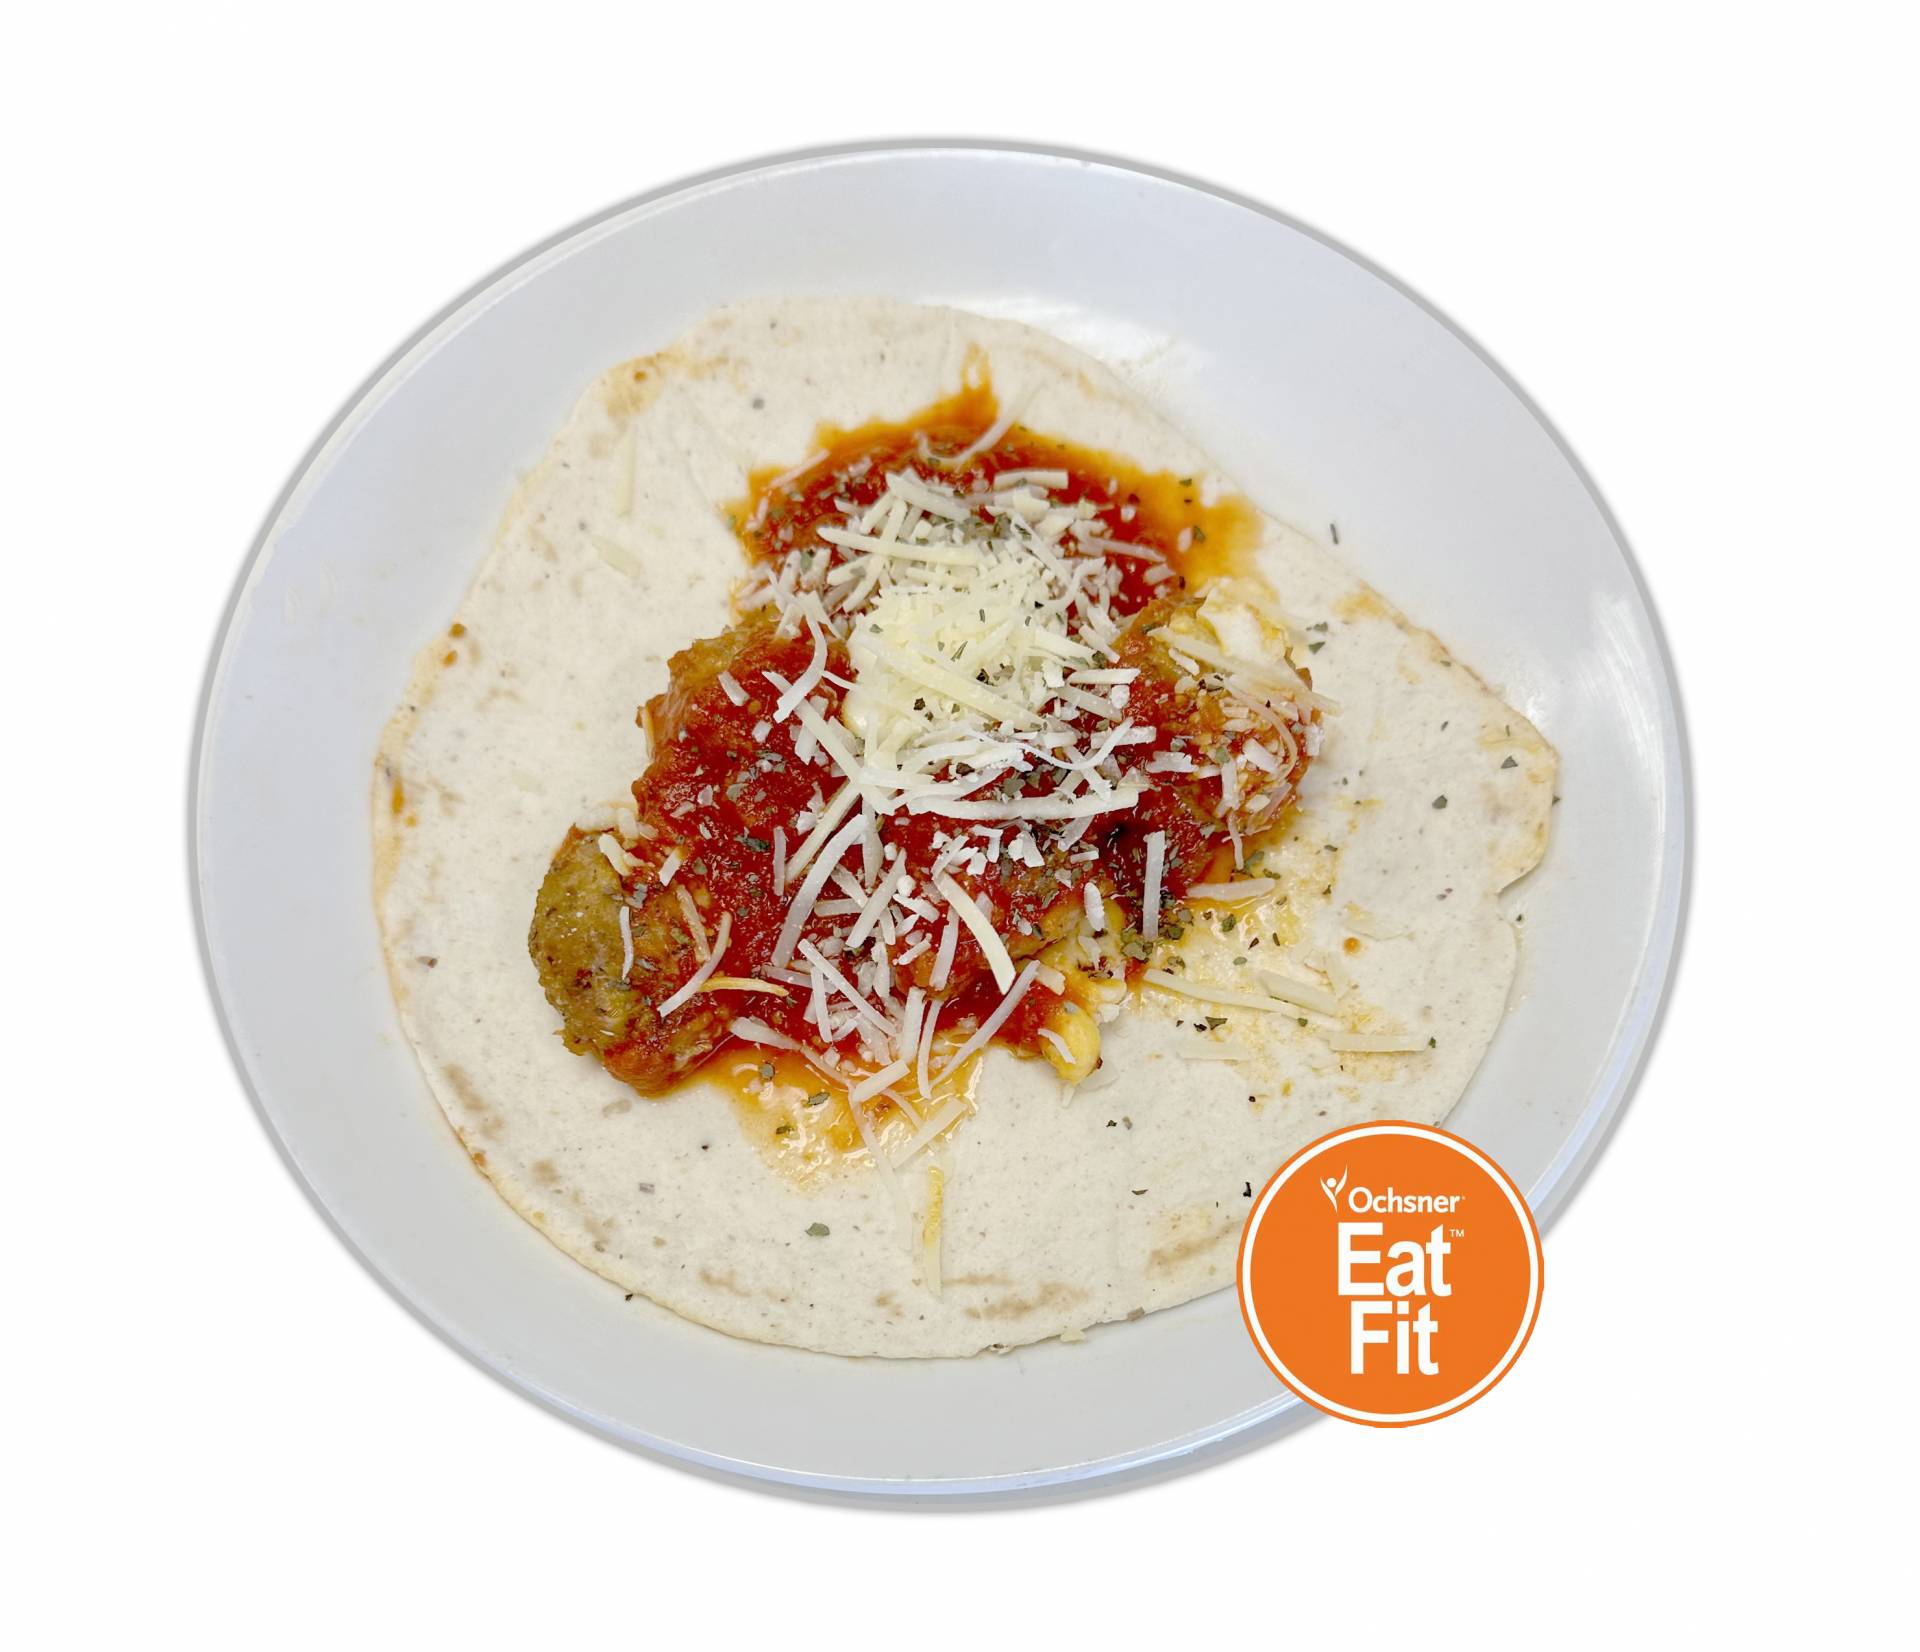 Italian Turkey Meatball Wrap with Premium Marinara Sauce - Low Carb